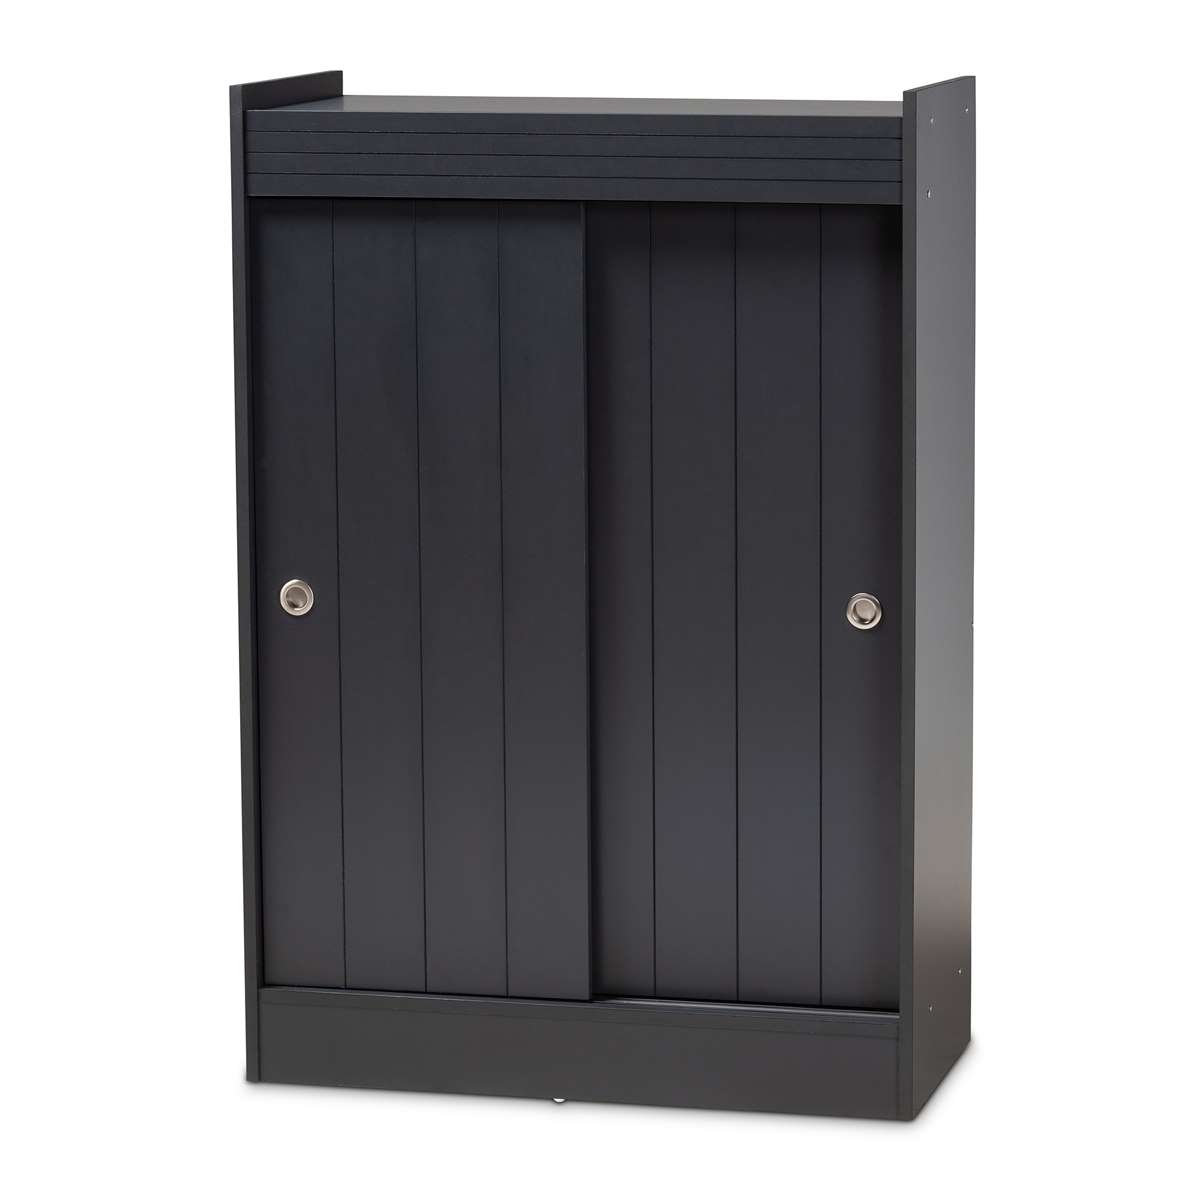 Baxton Studio Leone 2 Door Wood Entryway Shoe Storage Cabinet